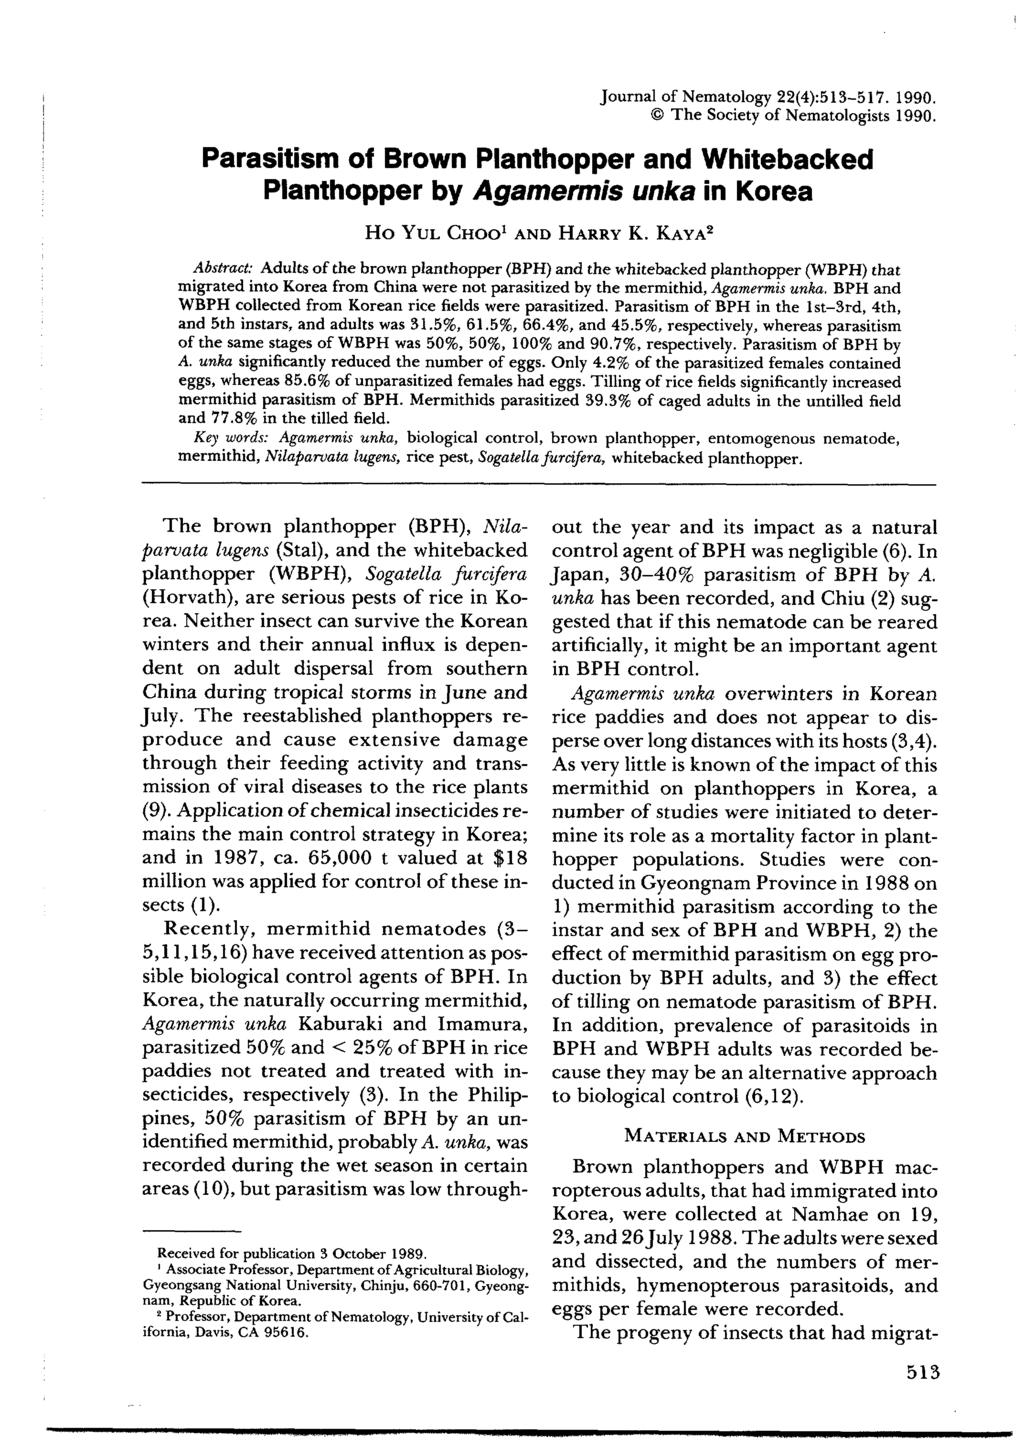 Journal of Nematology 22(4):513-517. 1990. The Society of Nematologists 1990. Parasitism of Brown Planthopper and Whitebacked Planthopper by Agamermis unka in Korea Ho YUL CHOO 1 AND HARRY K.